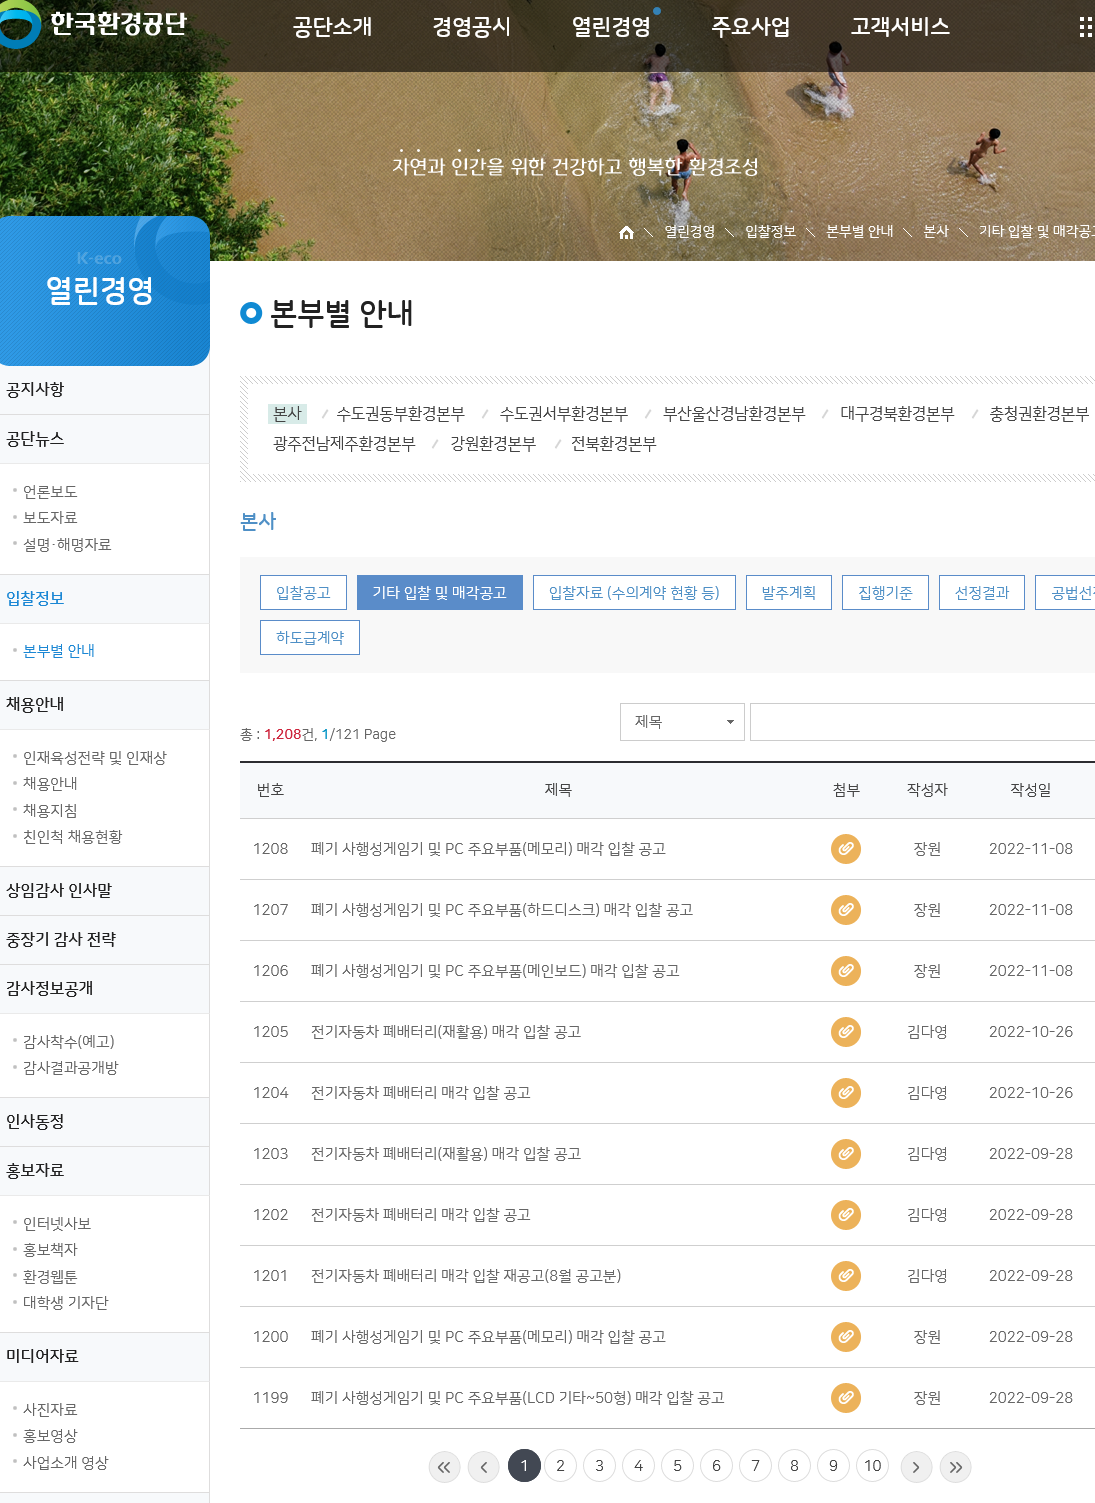 Screenshot 2022-11-09 at 11-41-17 기타 입찰 및 매각공고 목록 한국환경공단.png